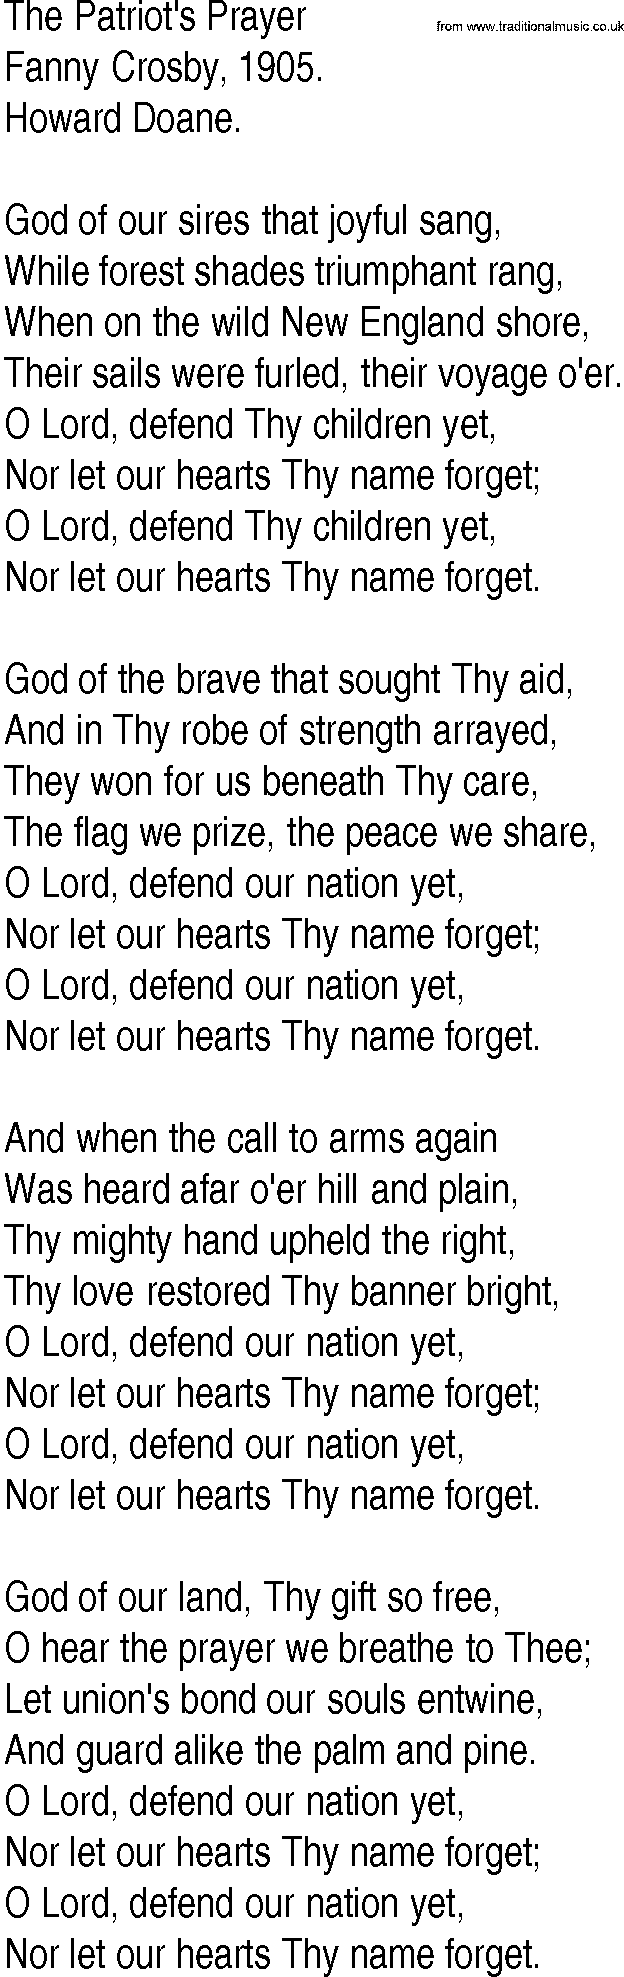 Hymn and Gospel Song: The Patriot's Prayer by Fanny Crosby lyrics